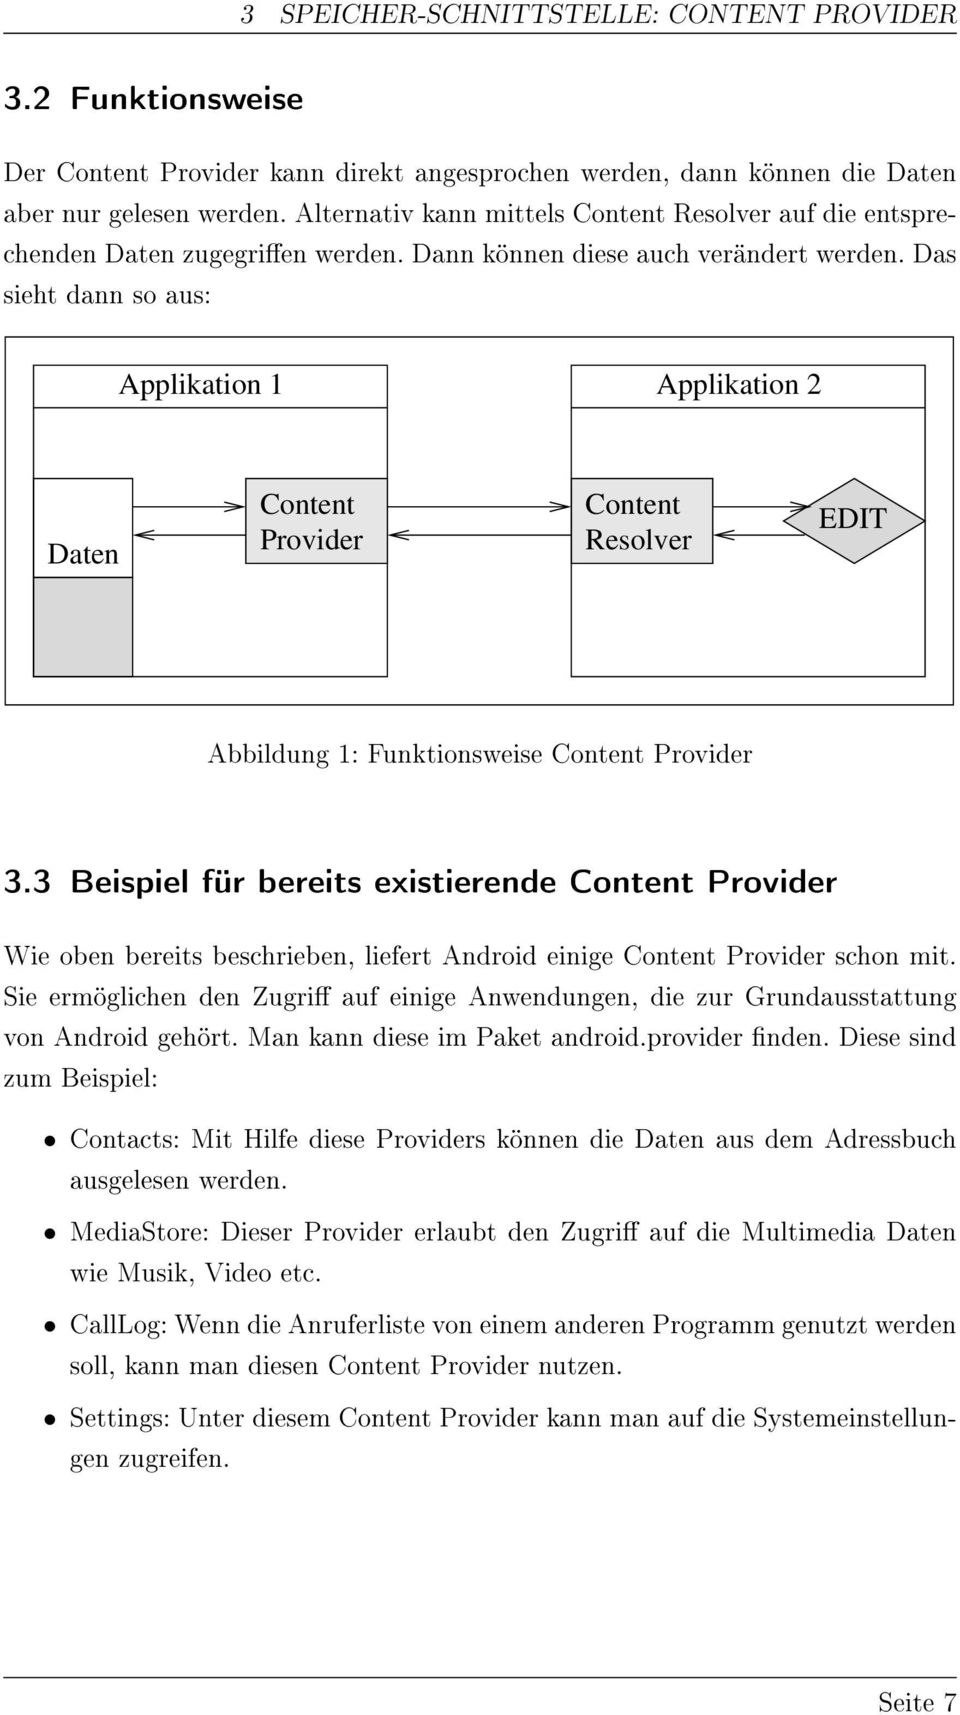 Das sieht dann so aus: Applikation 1 Applikation 2 Daten Content Provider Content Resolver EDIT Abbildung 1: Funktionsweise Content Provider 3.